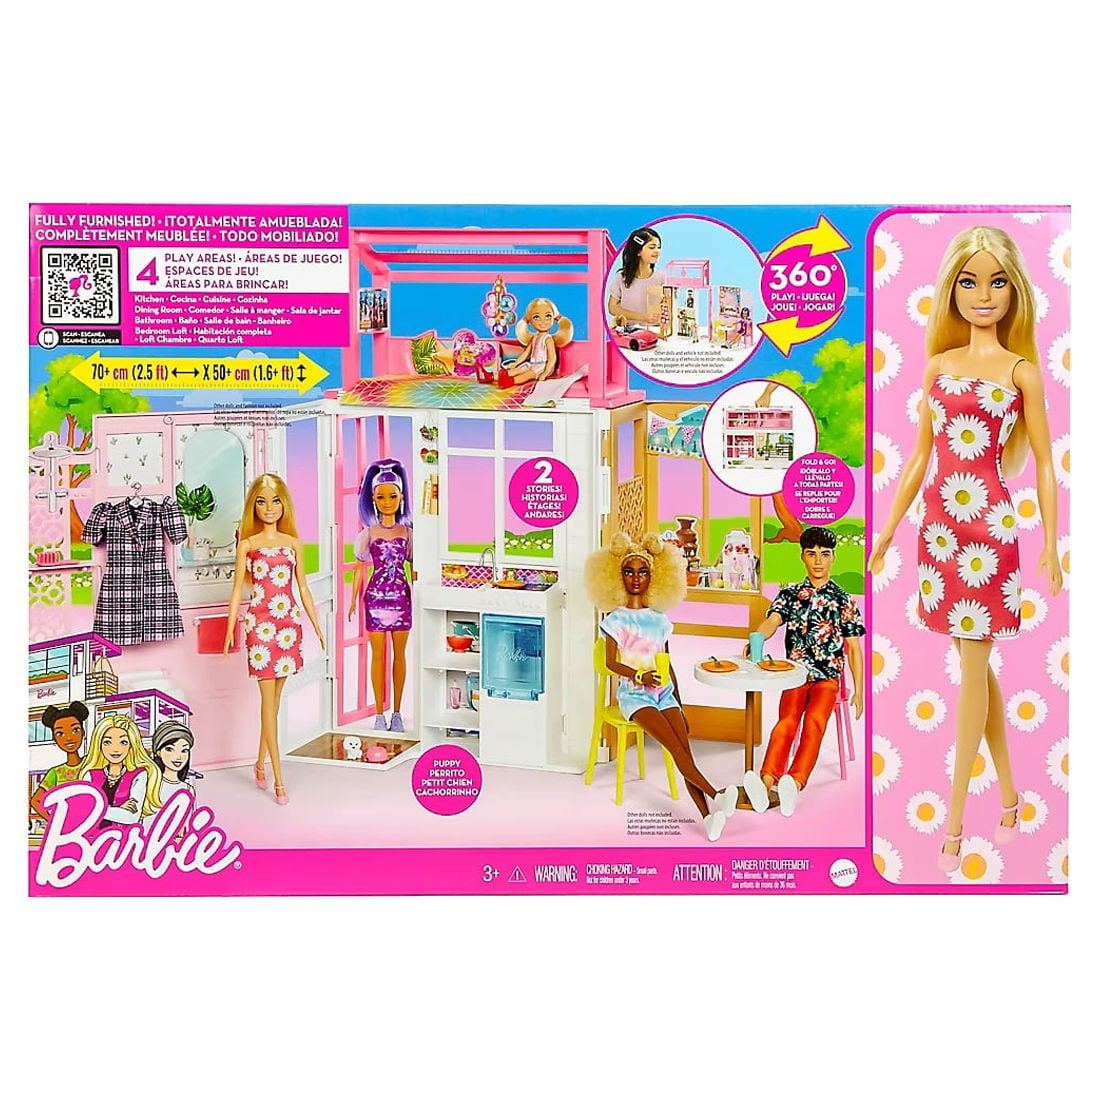 New Barbie Dream House doll house 2020 